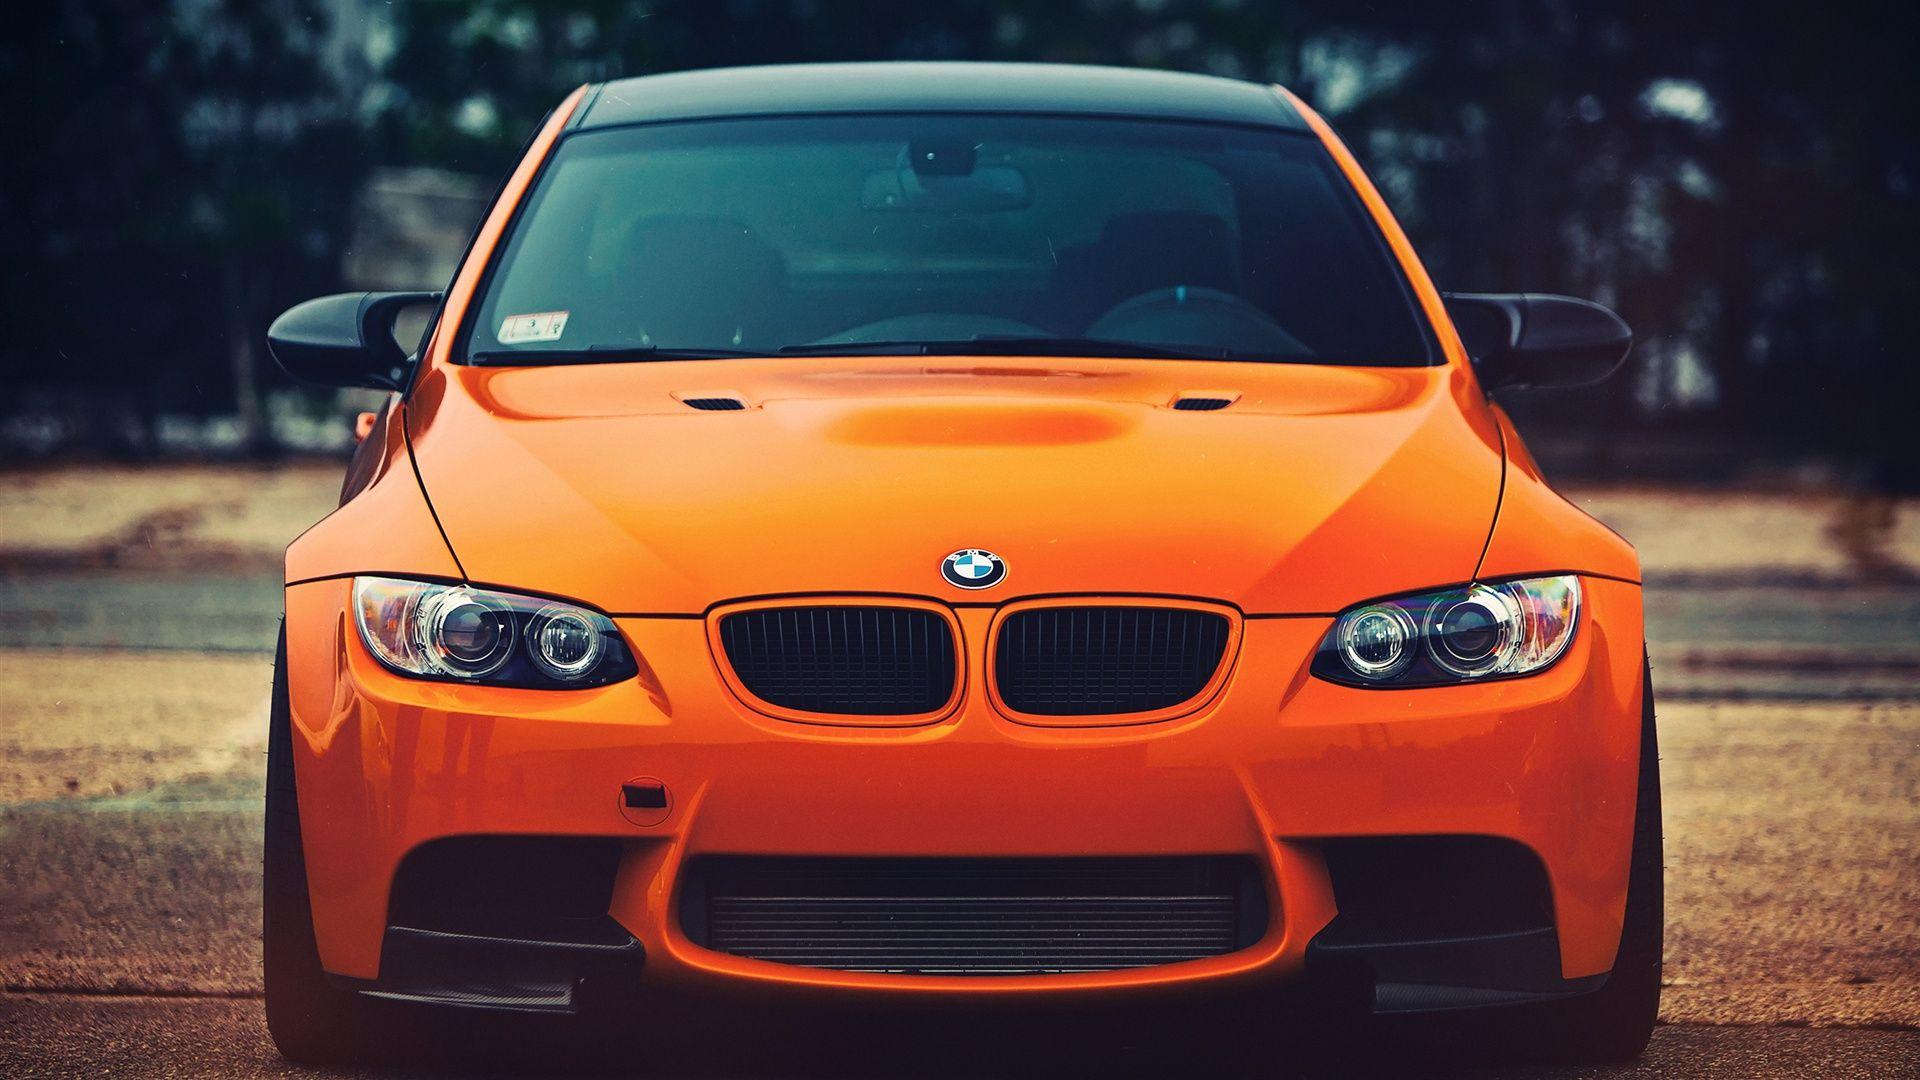 Download Wallpaper 1920x1080 BMW M3 orange car front view Full HD